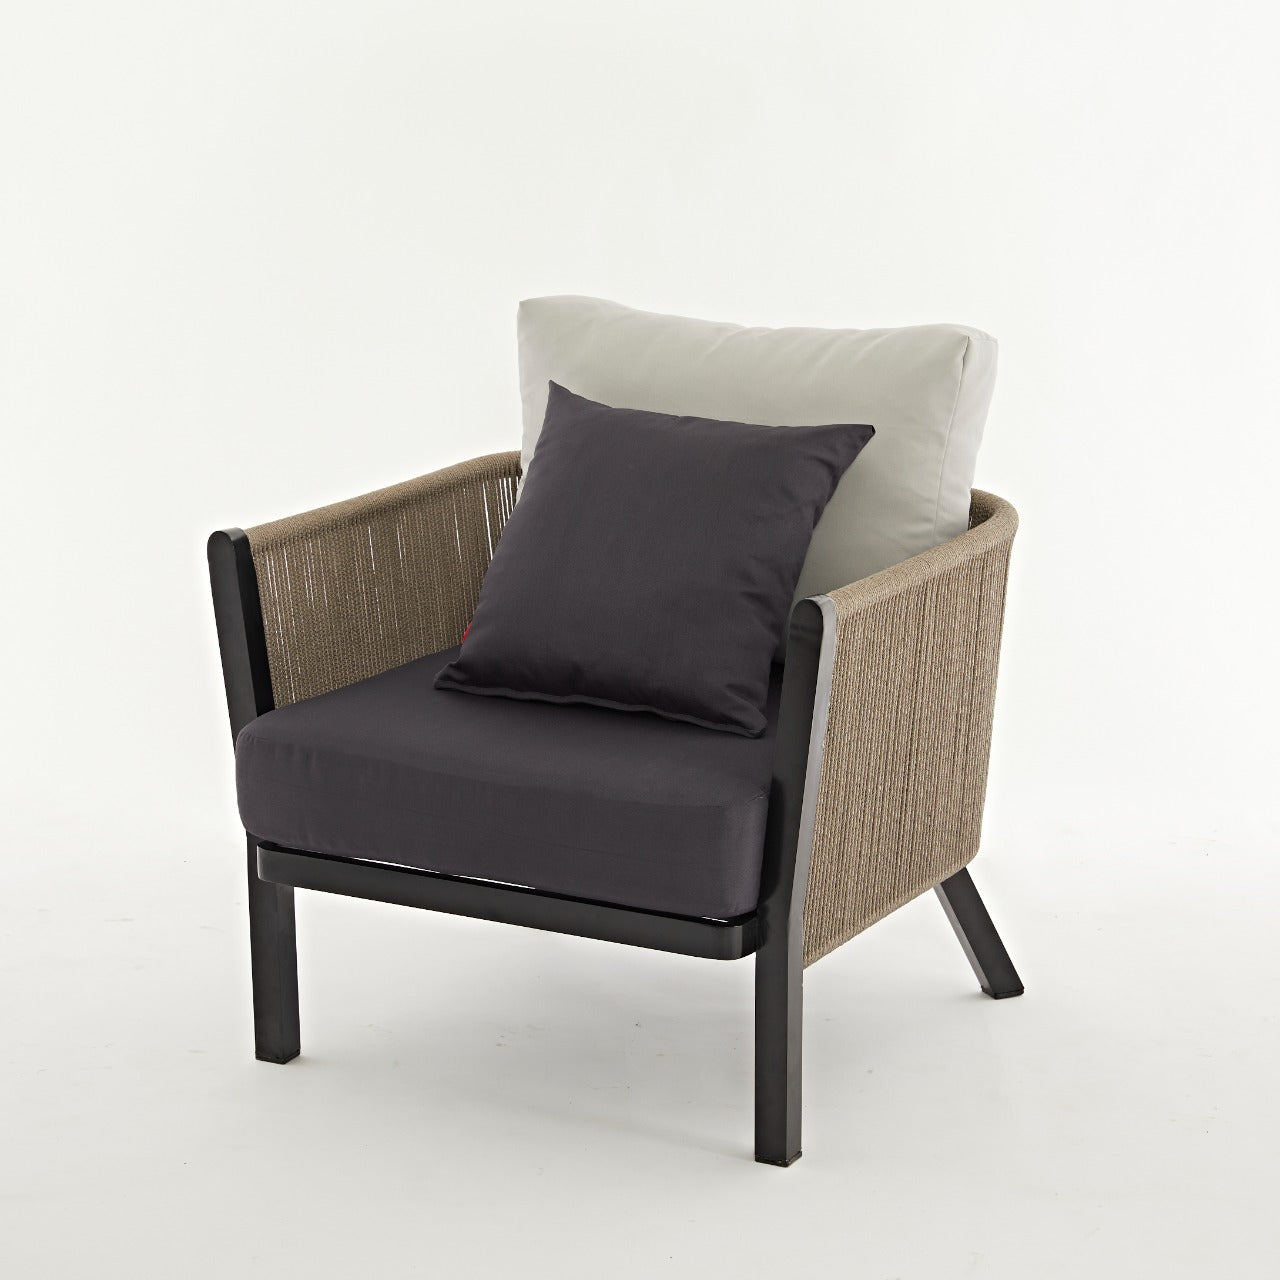 Ralin- Set of 1 Sofa 2 Chairs & 1 Table